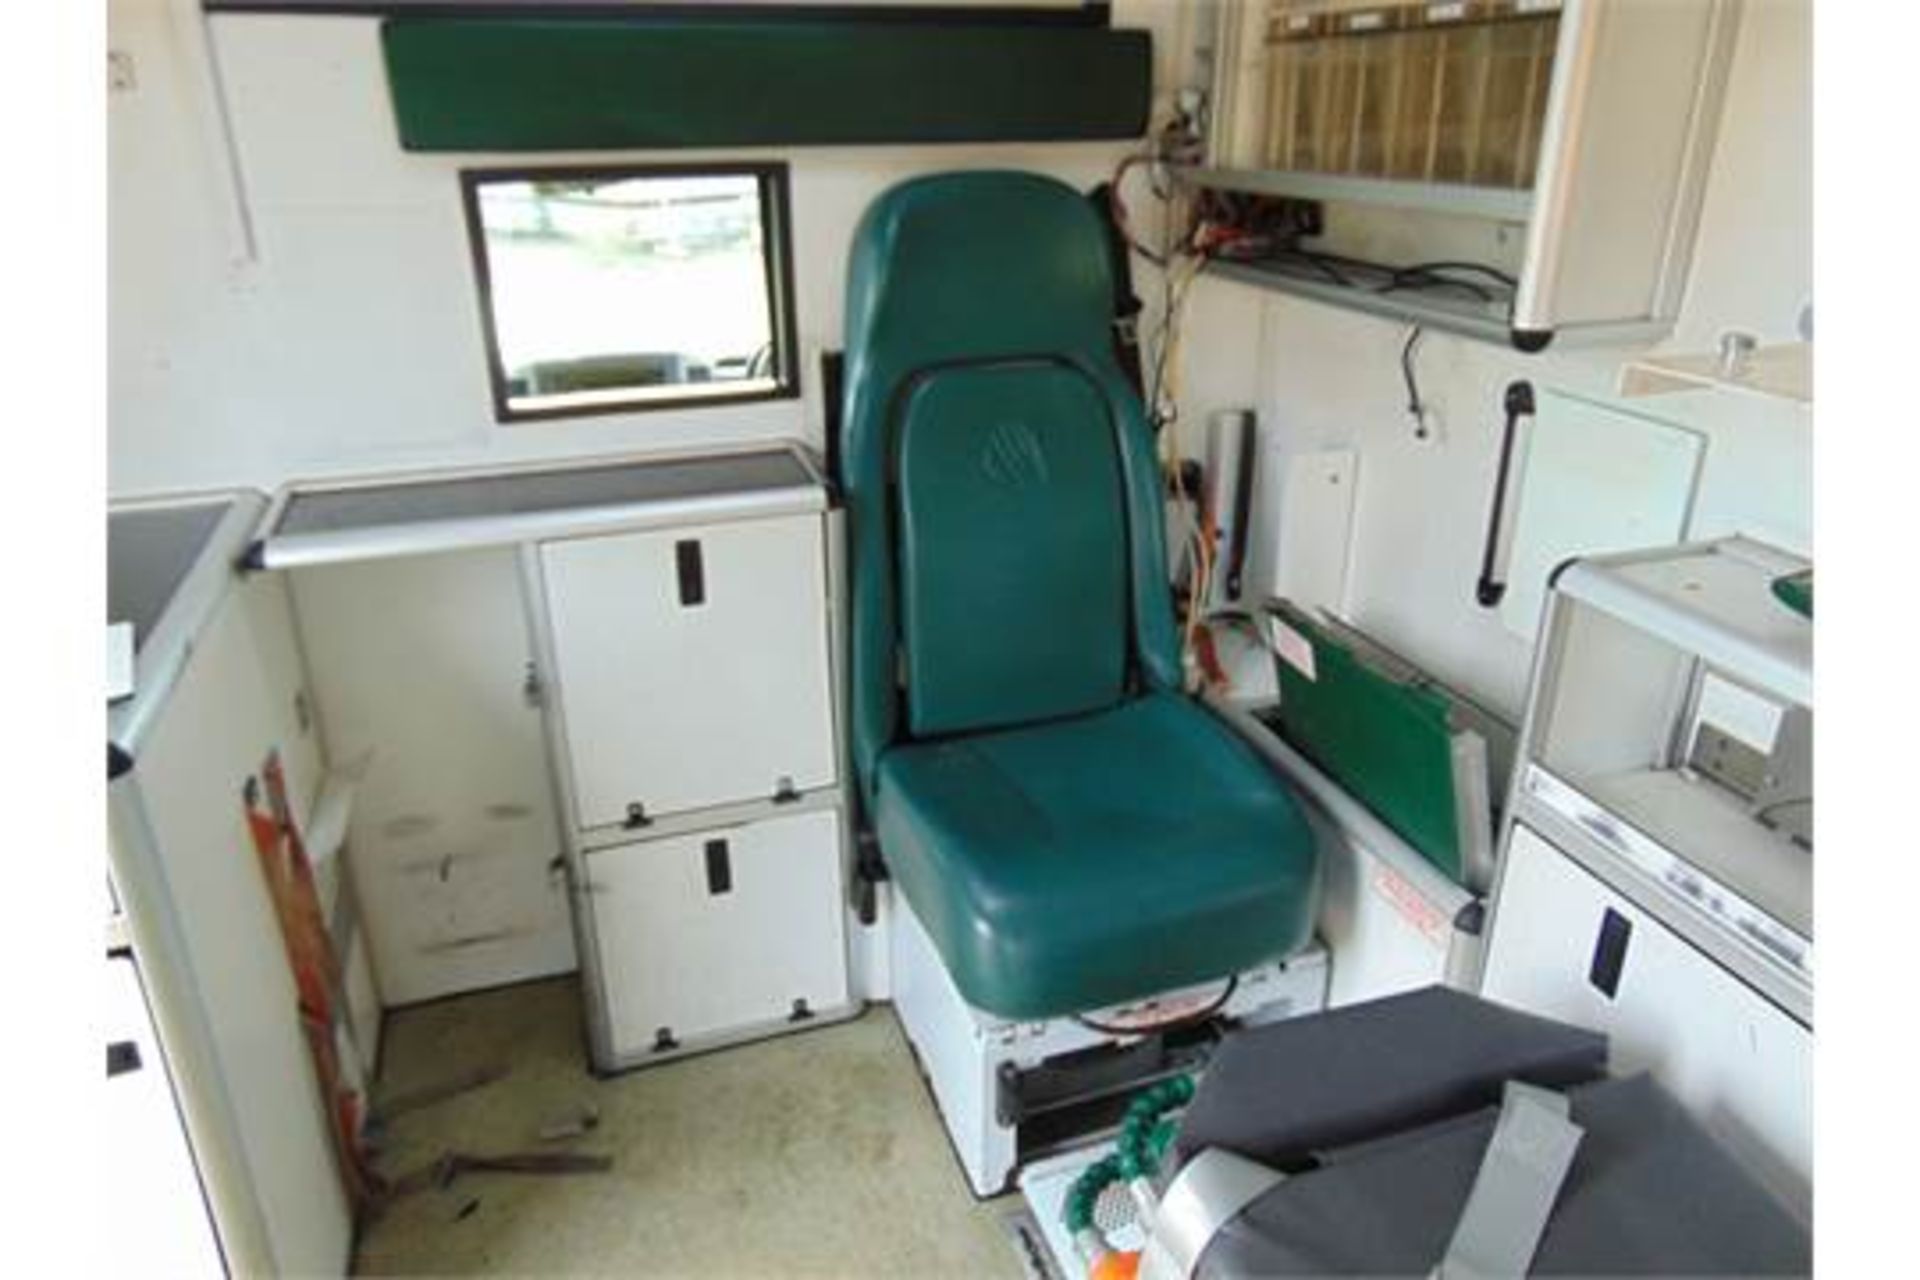 Mercedes Sprinter 515 CDI Turbo diesel ambulance - Image 19 of 21